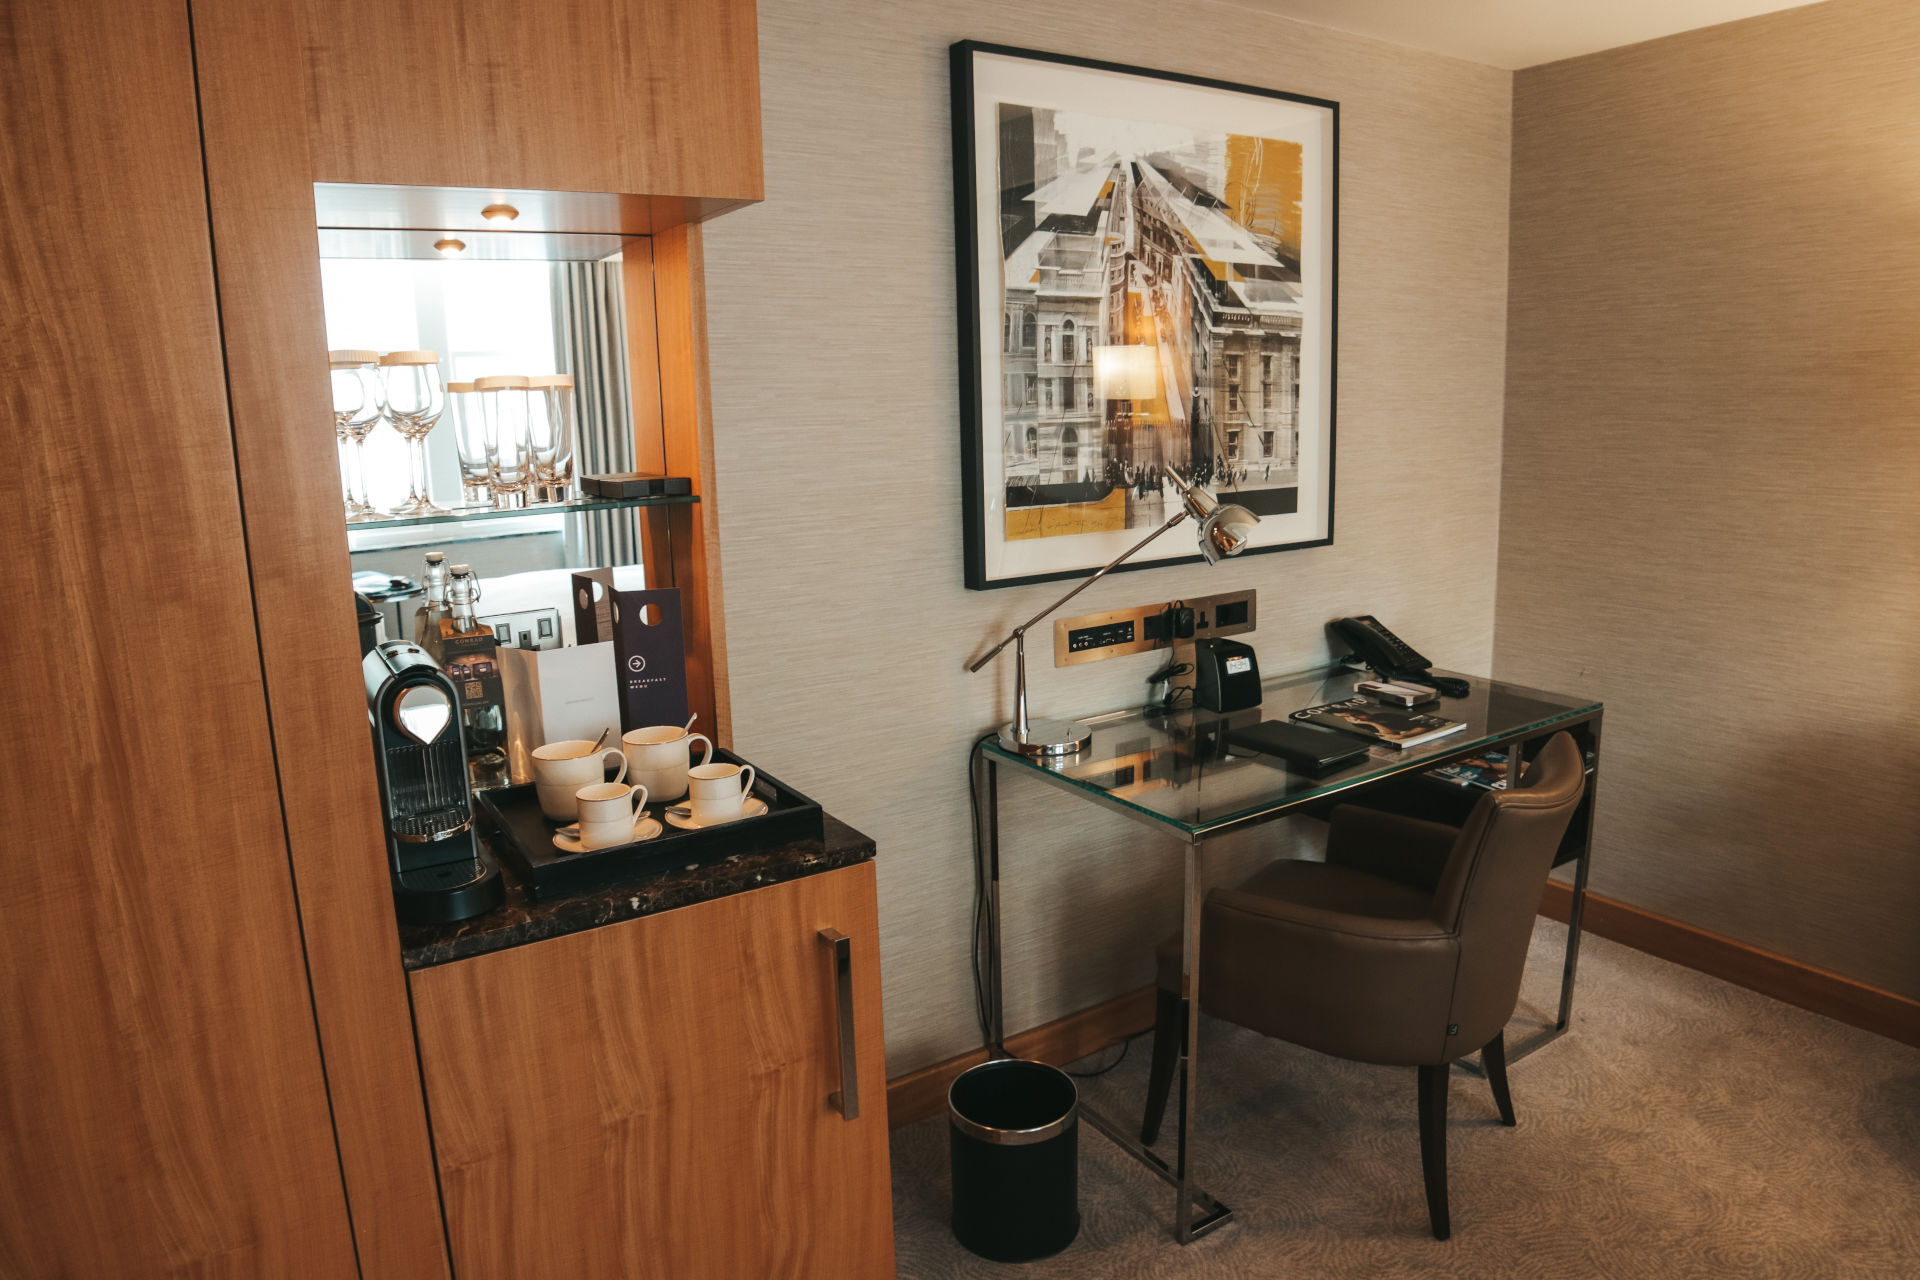 Hilton Hotel Room Coffee Bar And Desk